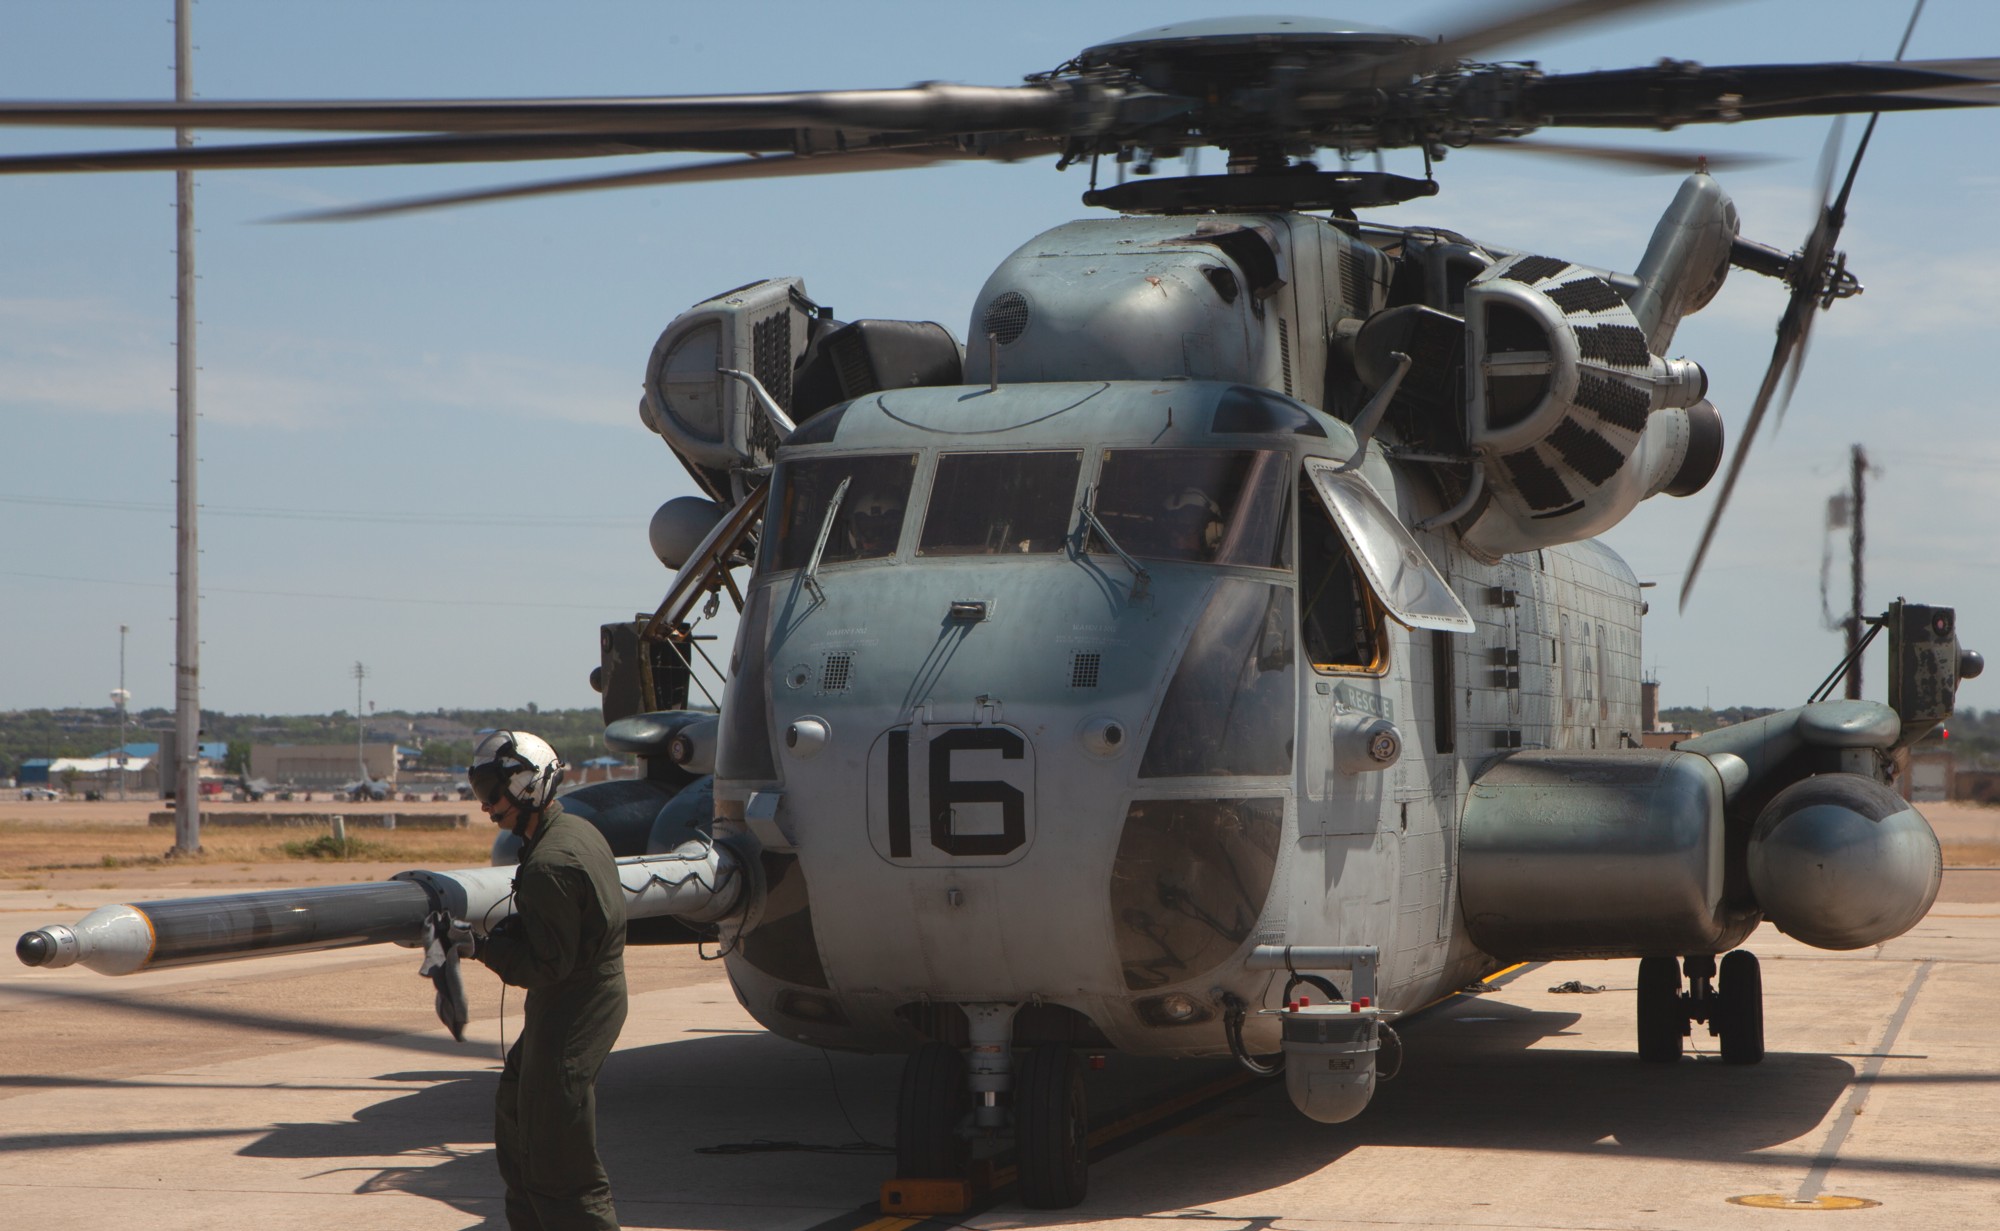 hmh-366 hammerheads ch-53e super stallion marine heavy helicopter squadron usmc nas jrb fort worth 166